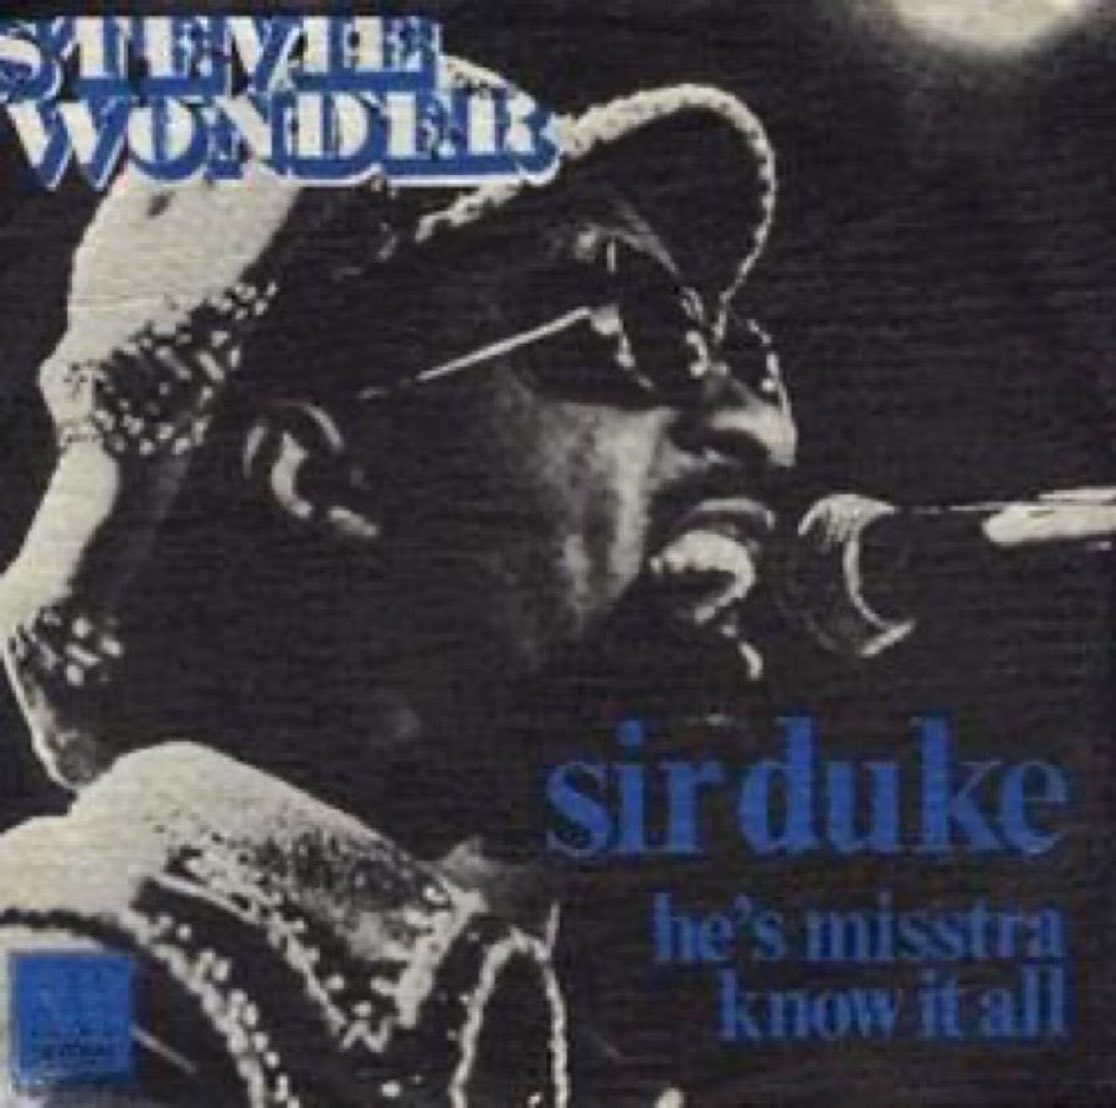 On May 21, 1977, “Sir Duke” by Stevie Wonder began a three week run as the number one song in the US. #StevieWonder